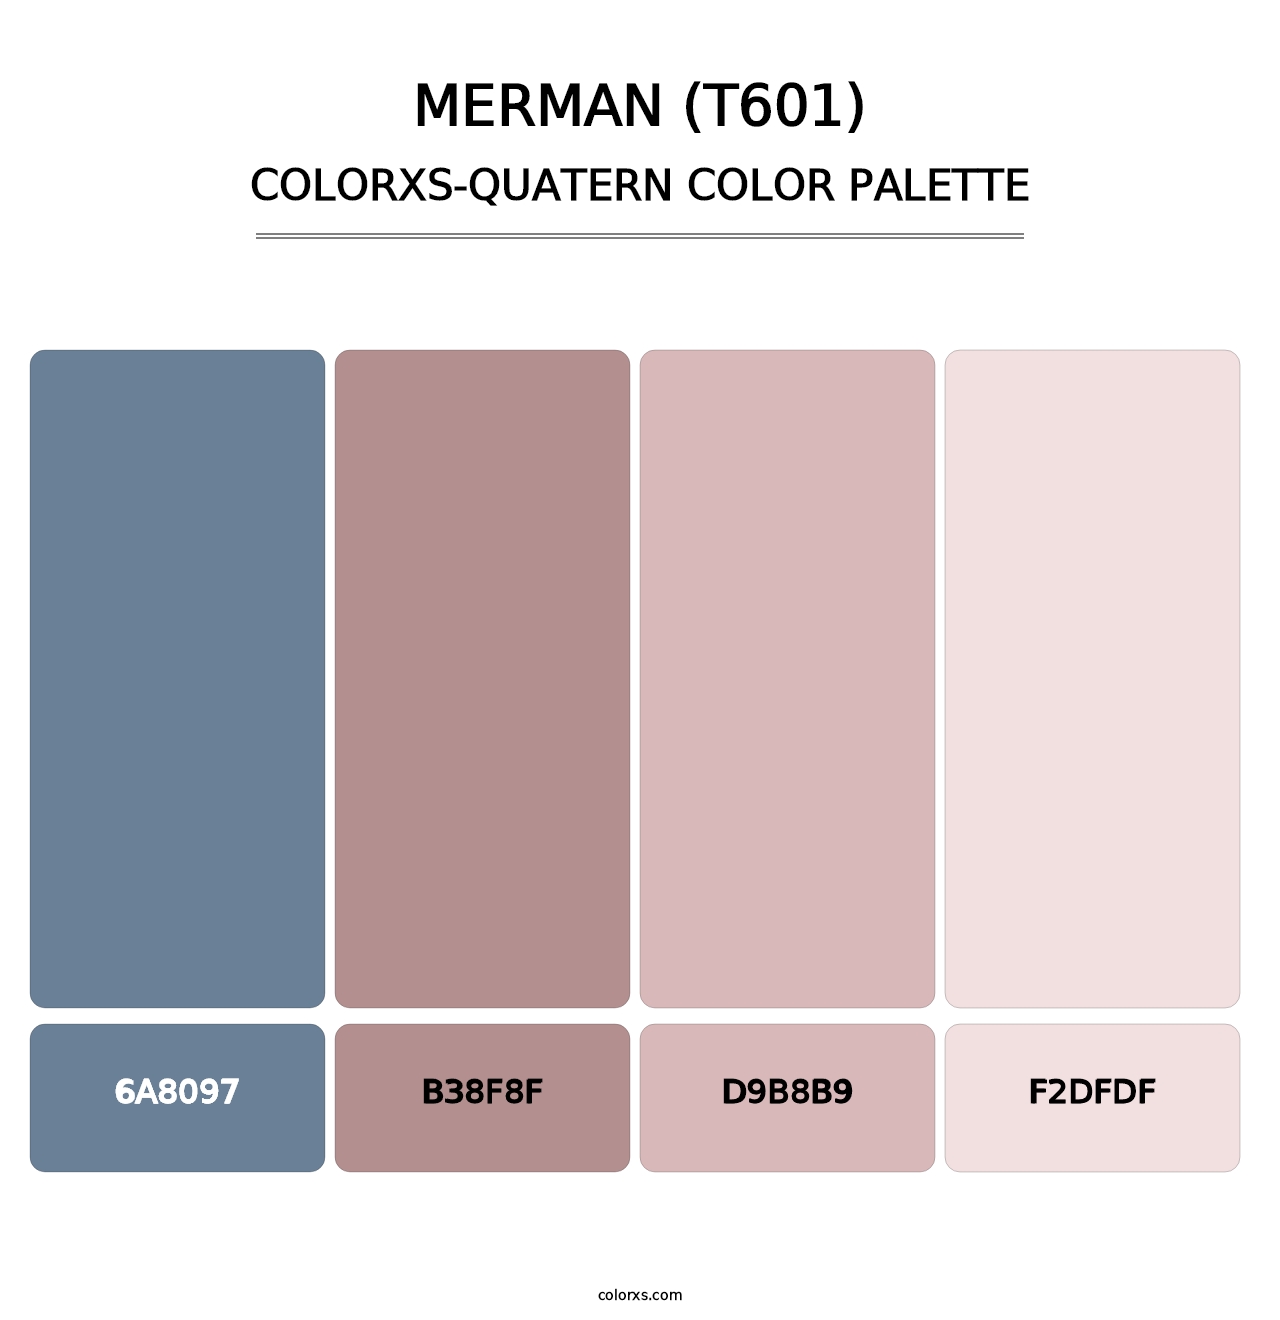 Merman (T601) - Colorxs Quatern Palette